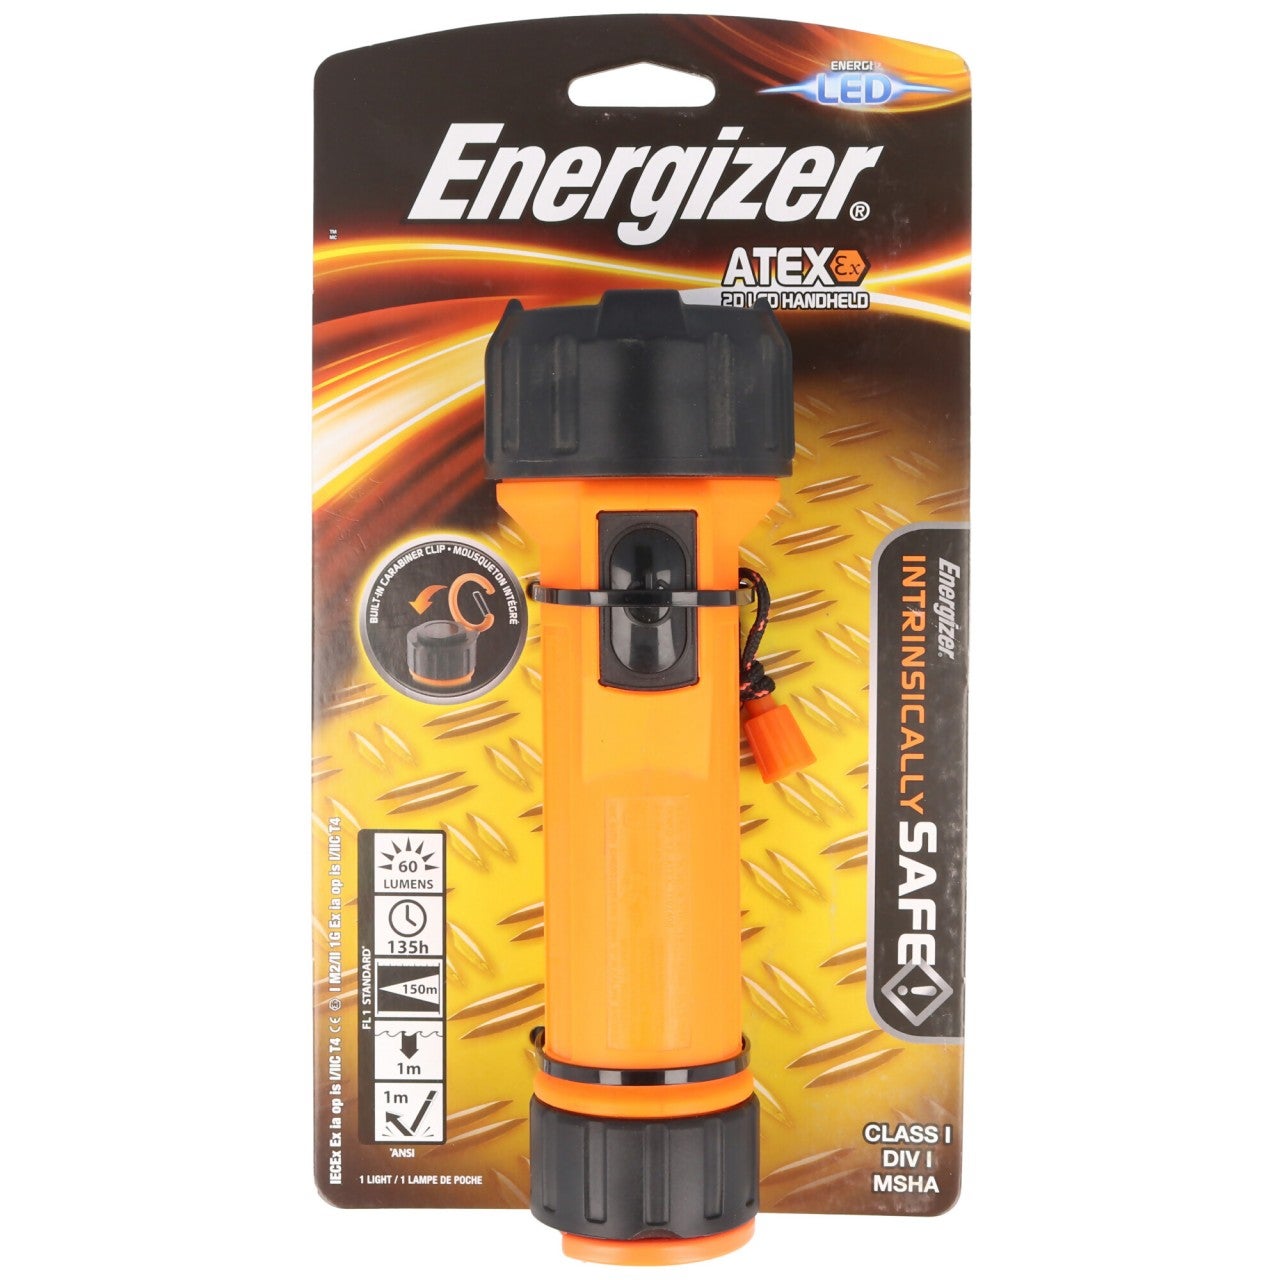 Energizer 2D ATEX - Lampe de poche - blanche - Noir, Orange de | Leroy Merlin